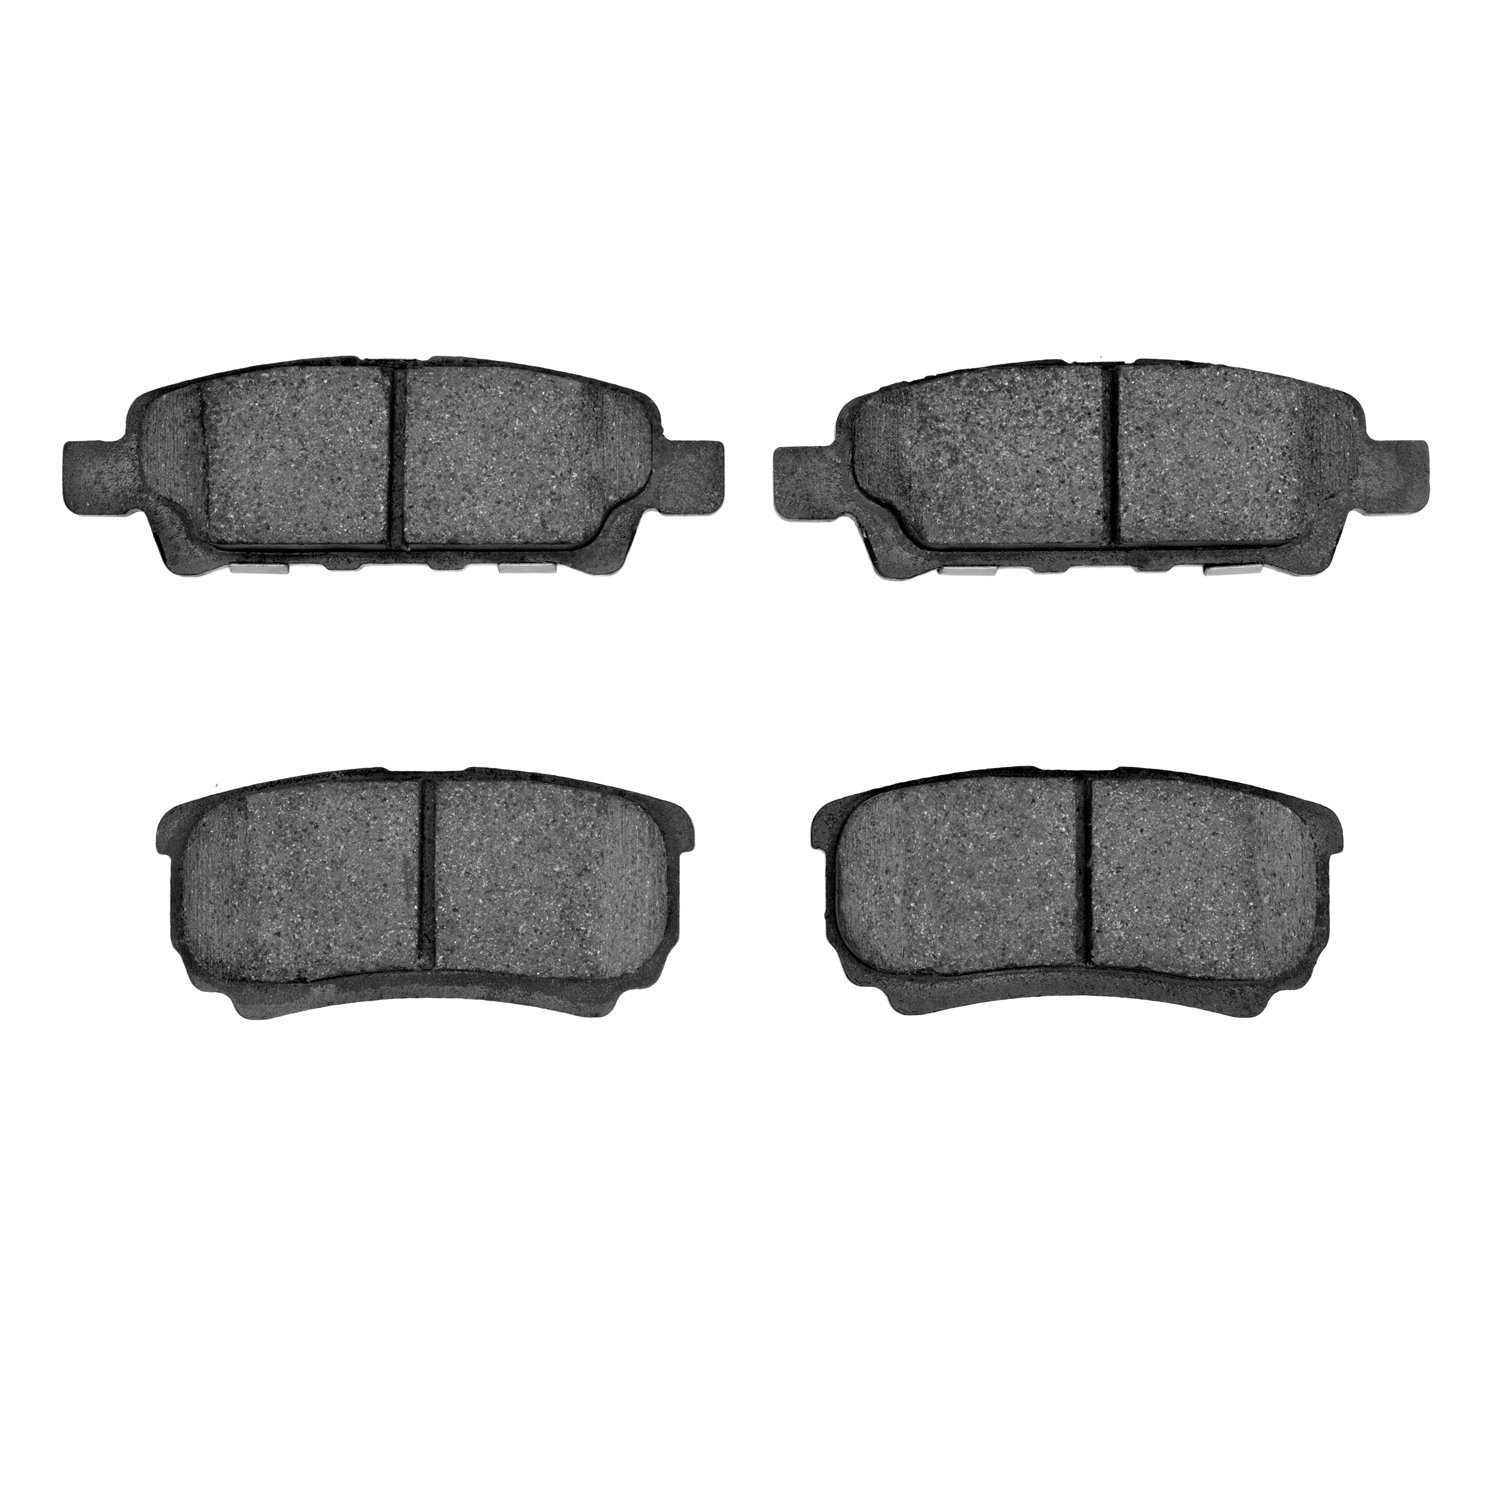 5000 Advanced Ceramic Brake Pads, 2004-2017 Multiple Makes/Models